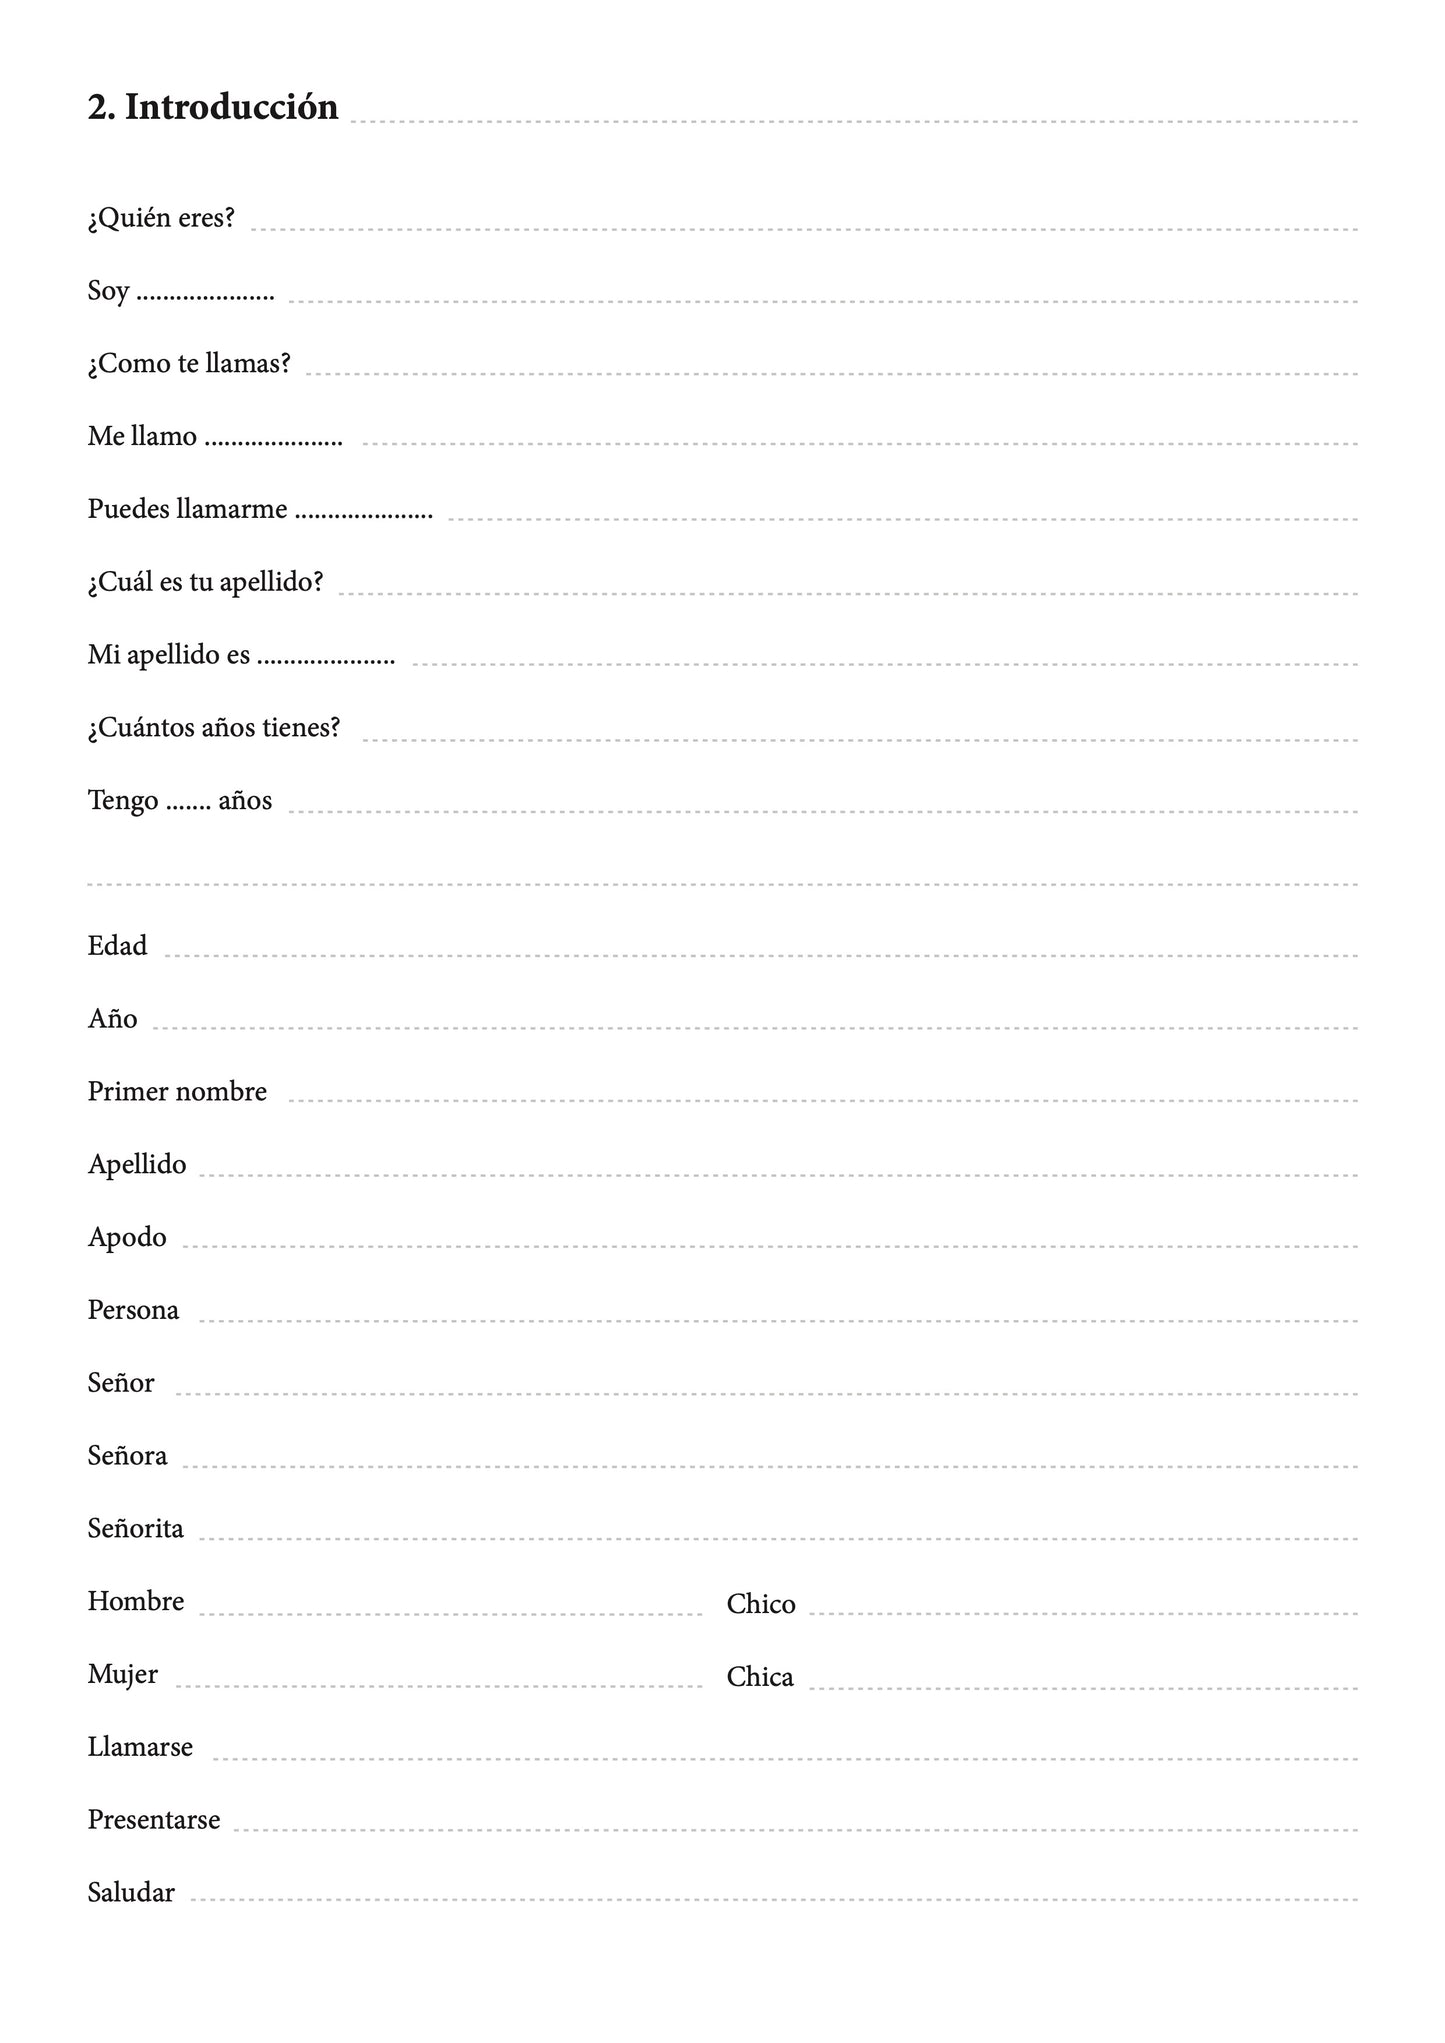 Español-comorense cuaderno de vocabulario